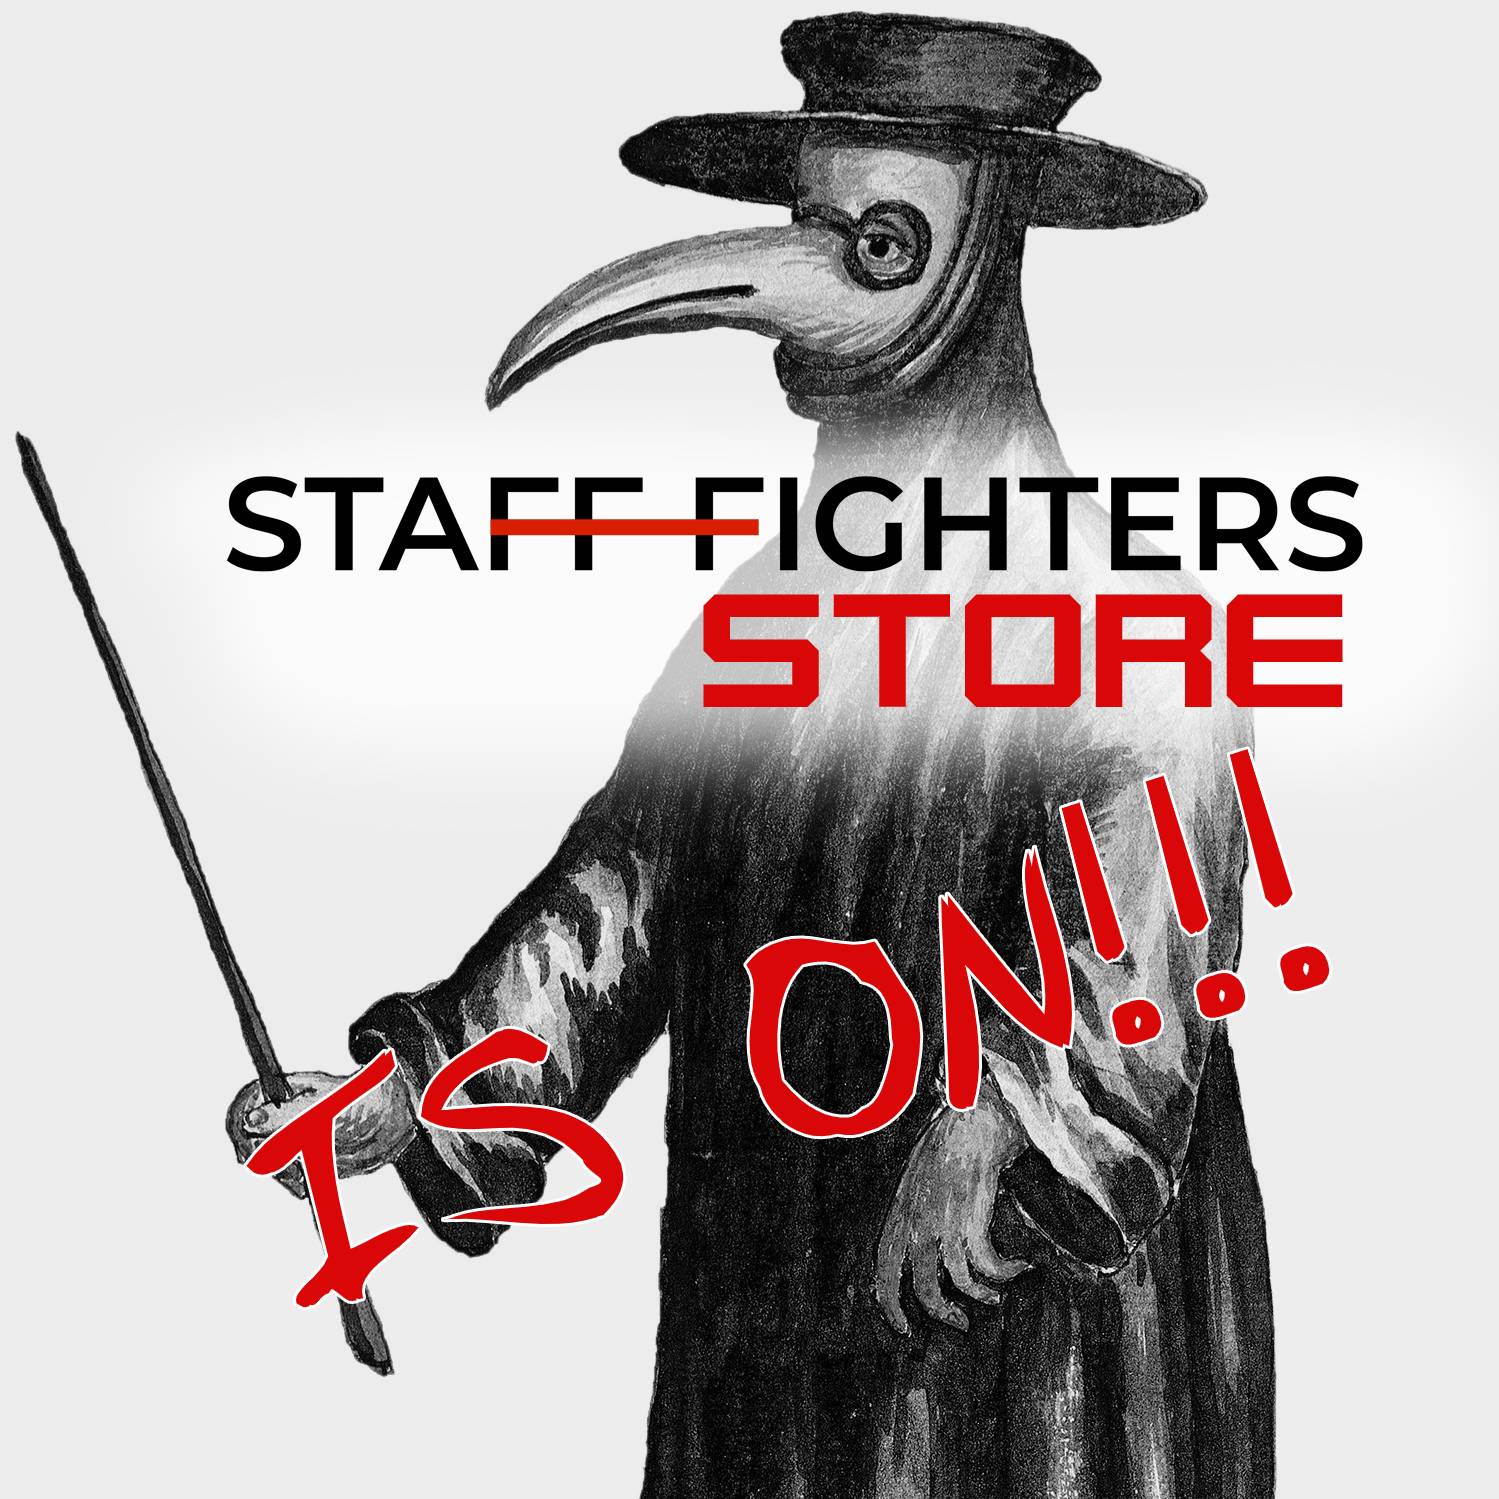 stafffighters online store is open